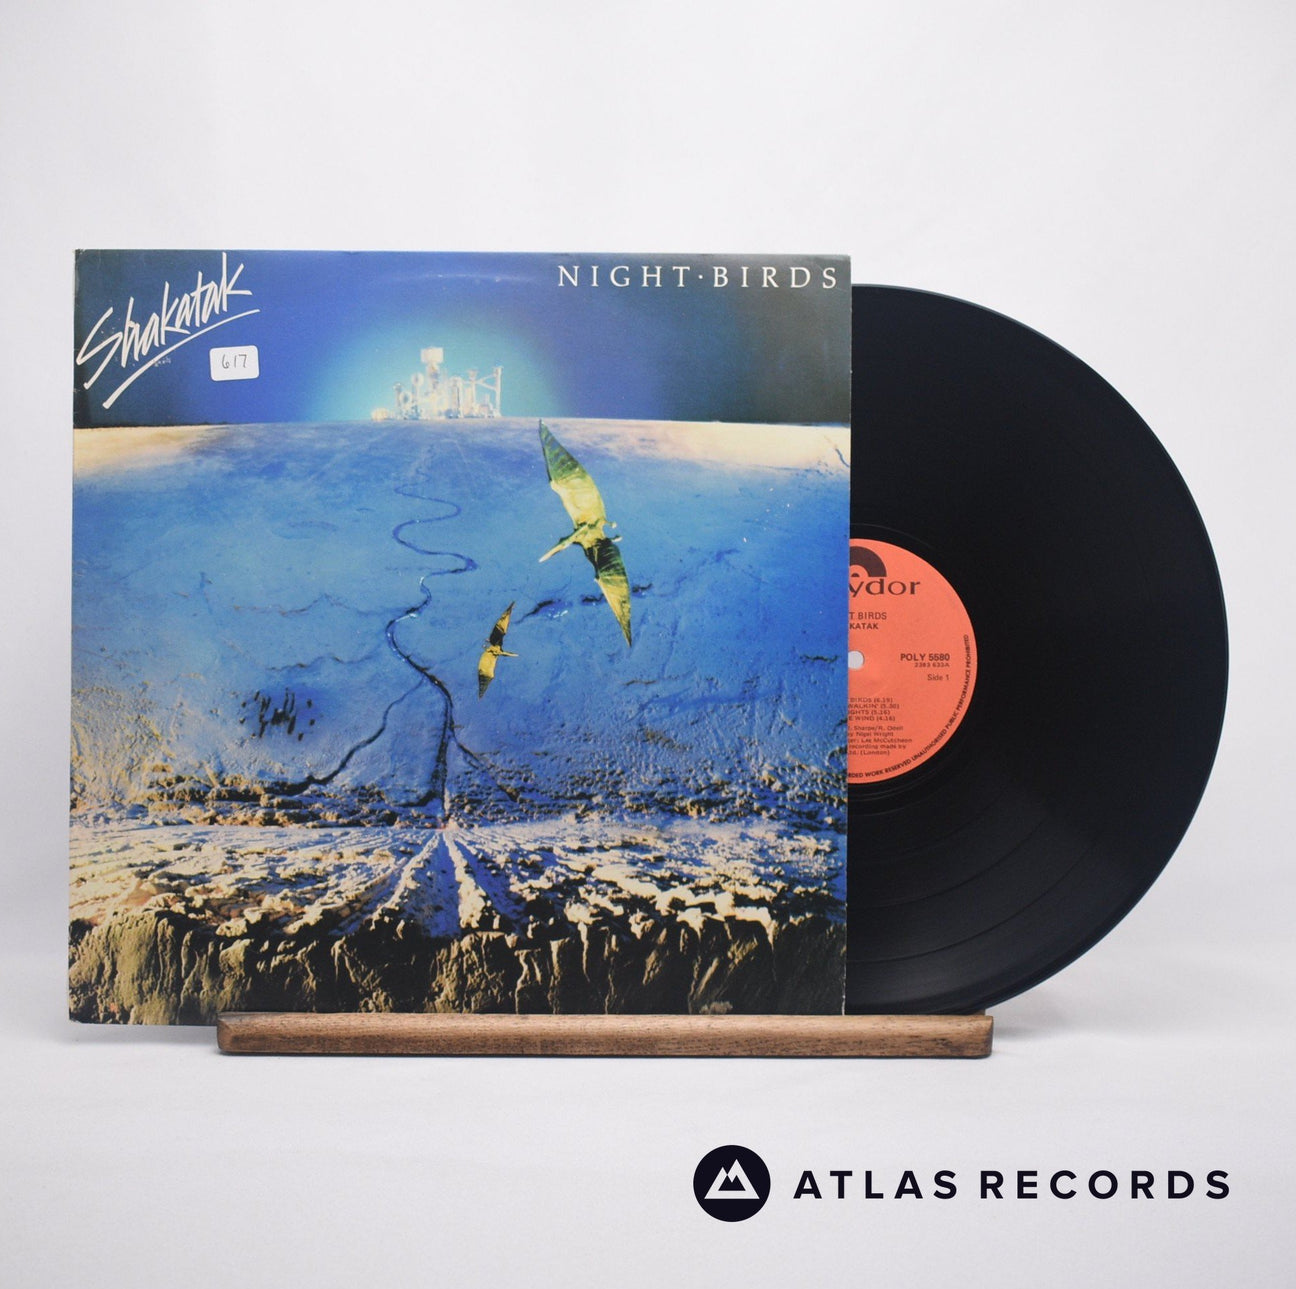 Shakatak Night Birds LP Vinyl Record - Front Cover & Record